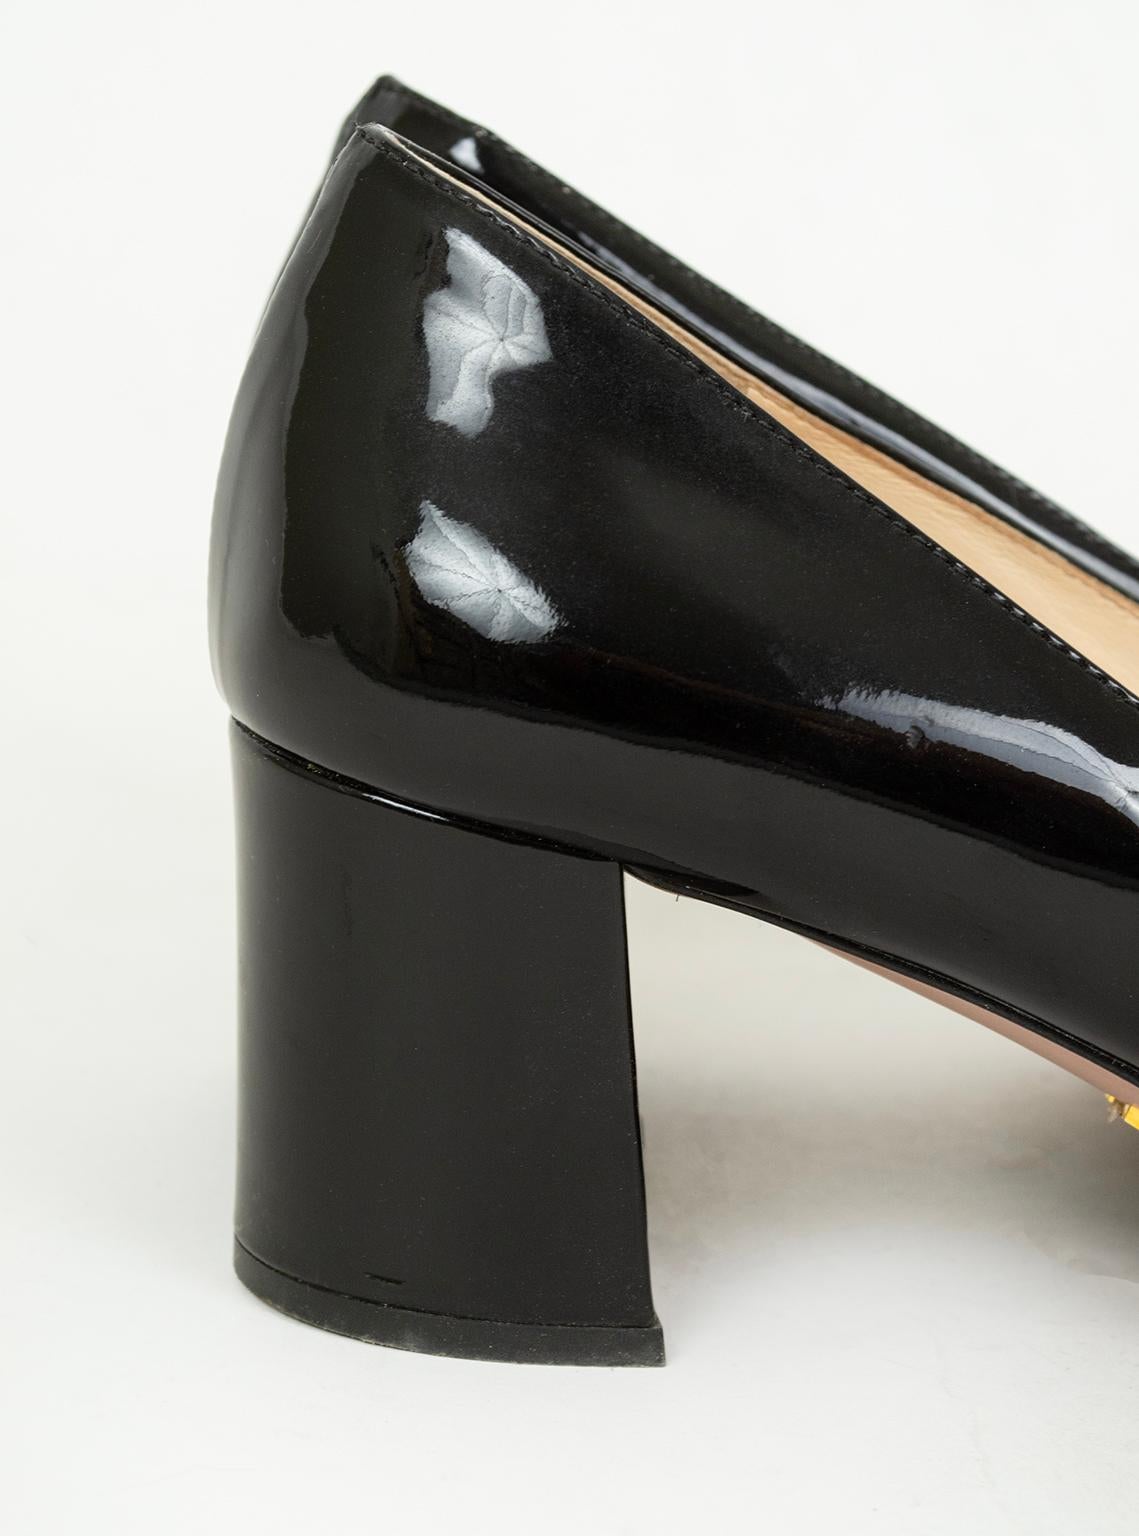 Prada Black Patent Block Heel Buckle Toe Loafer Pumps – 38.5, 2006 For Sale 2